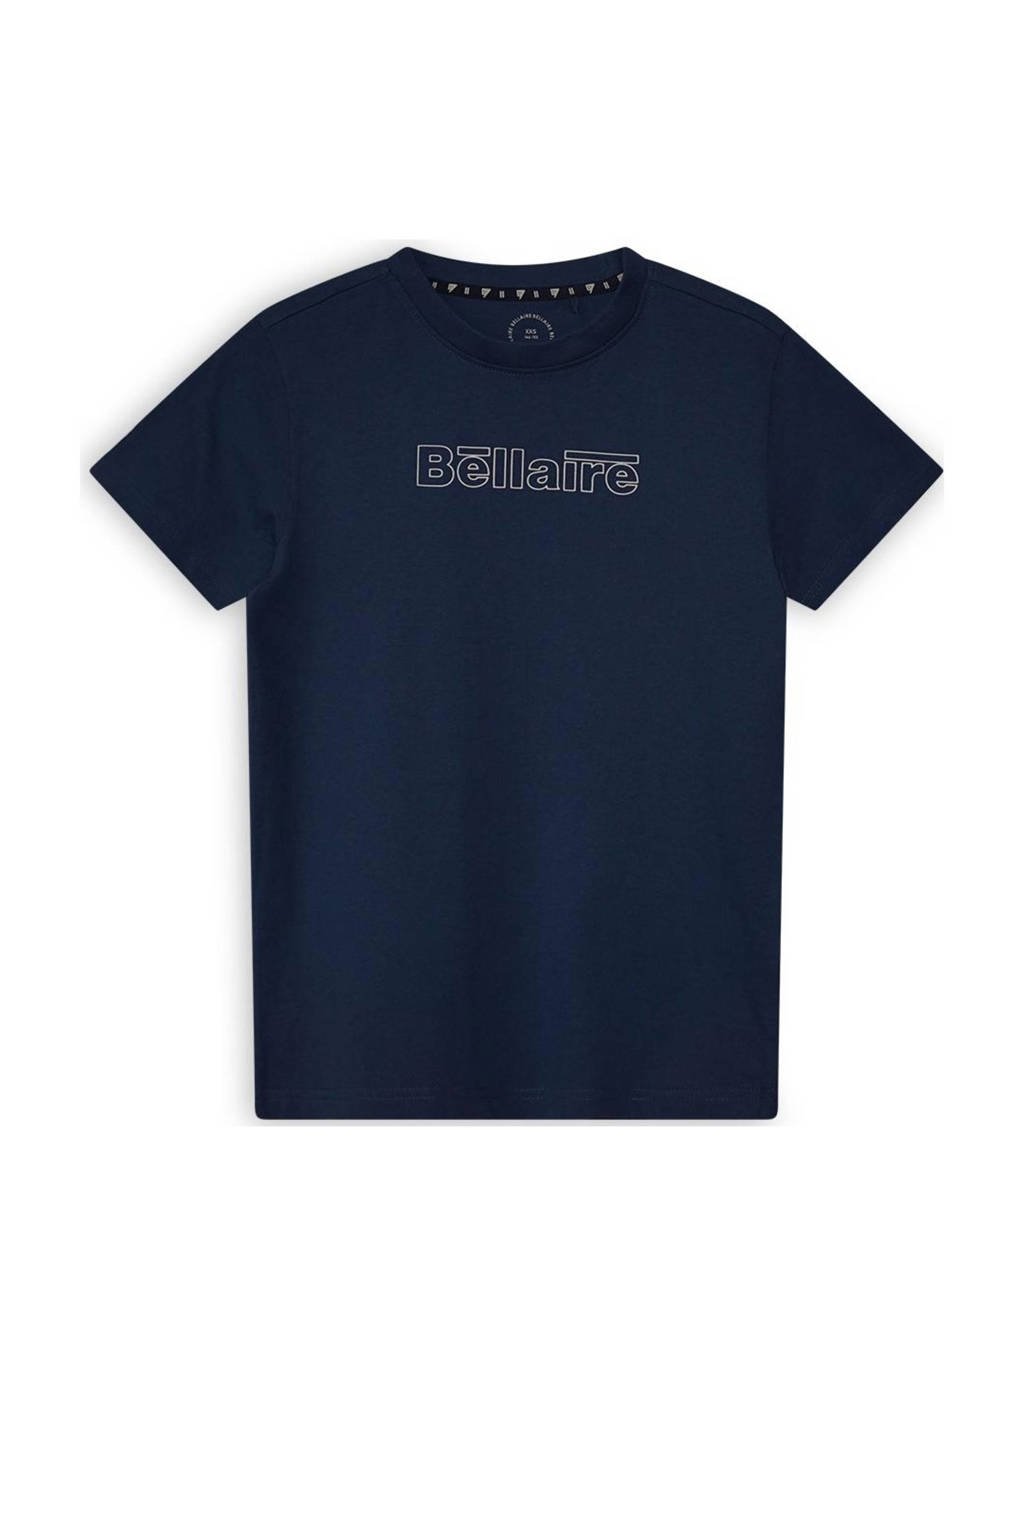 T-shirt met logo donkerblauw